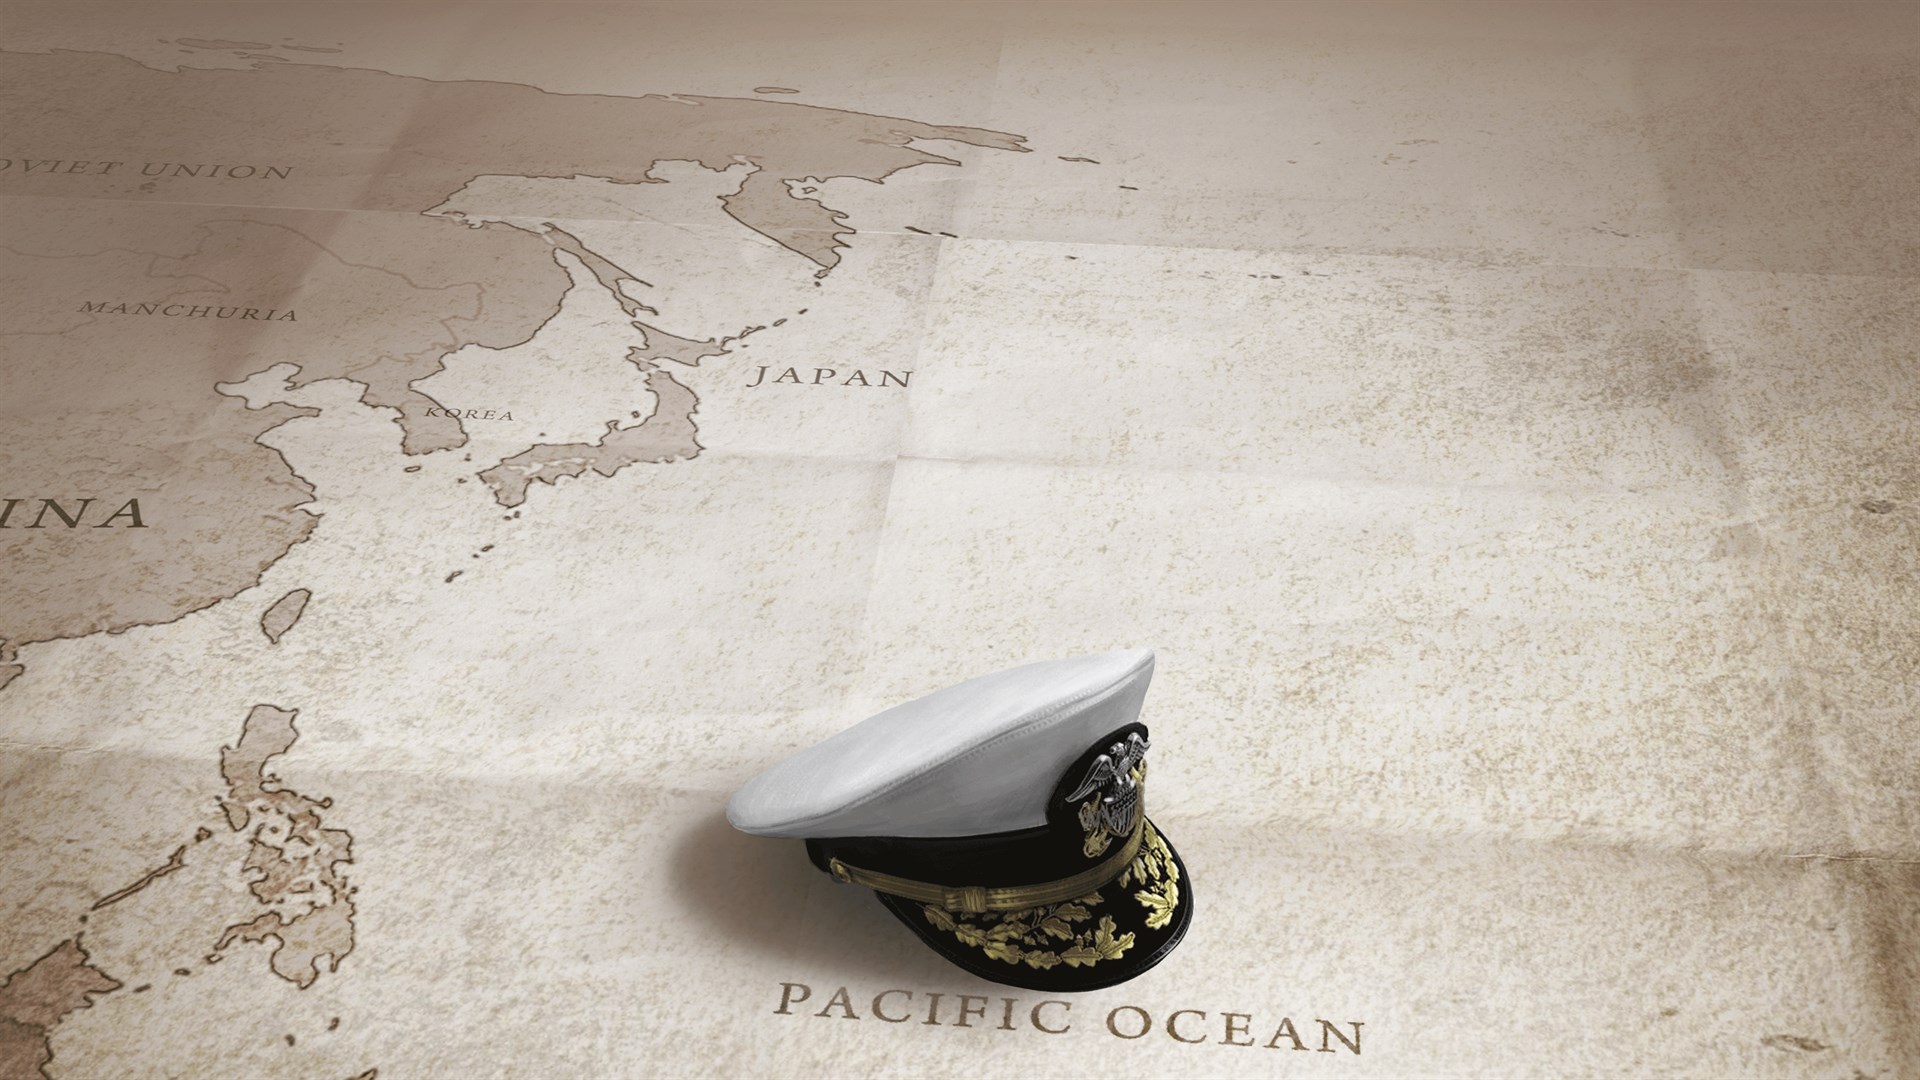 Order of Battle: U.S. Pacific